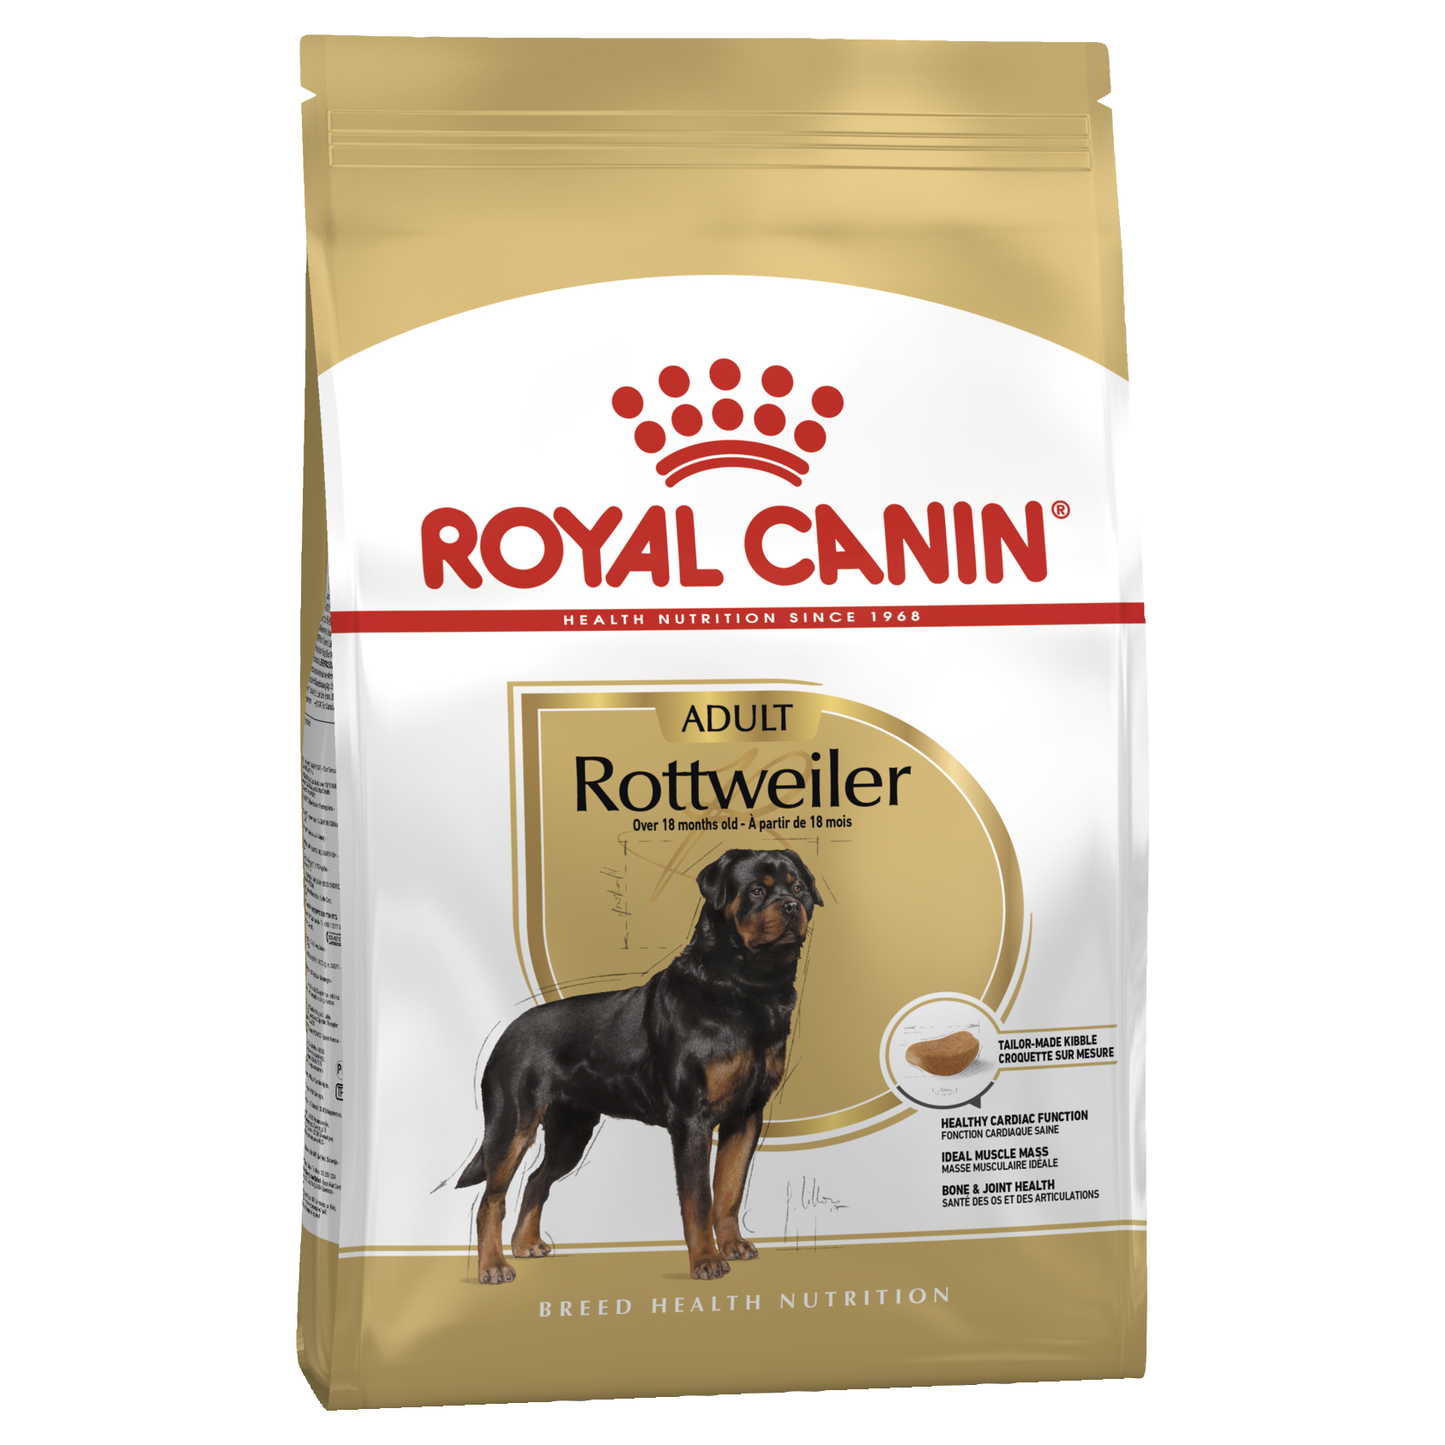 Royal Canin Rottweiler Dry Dog Food